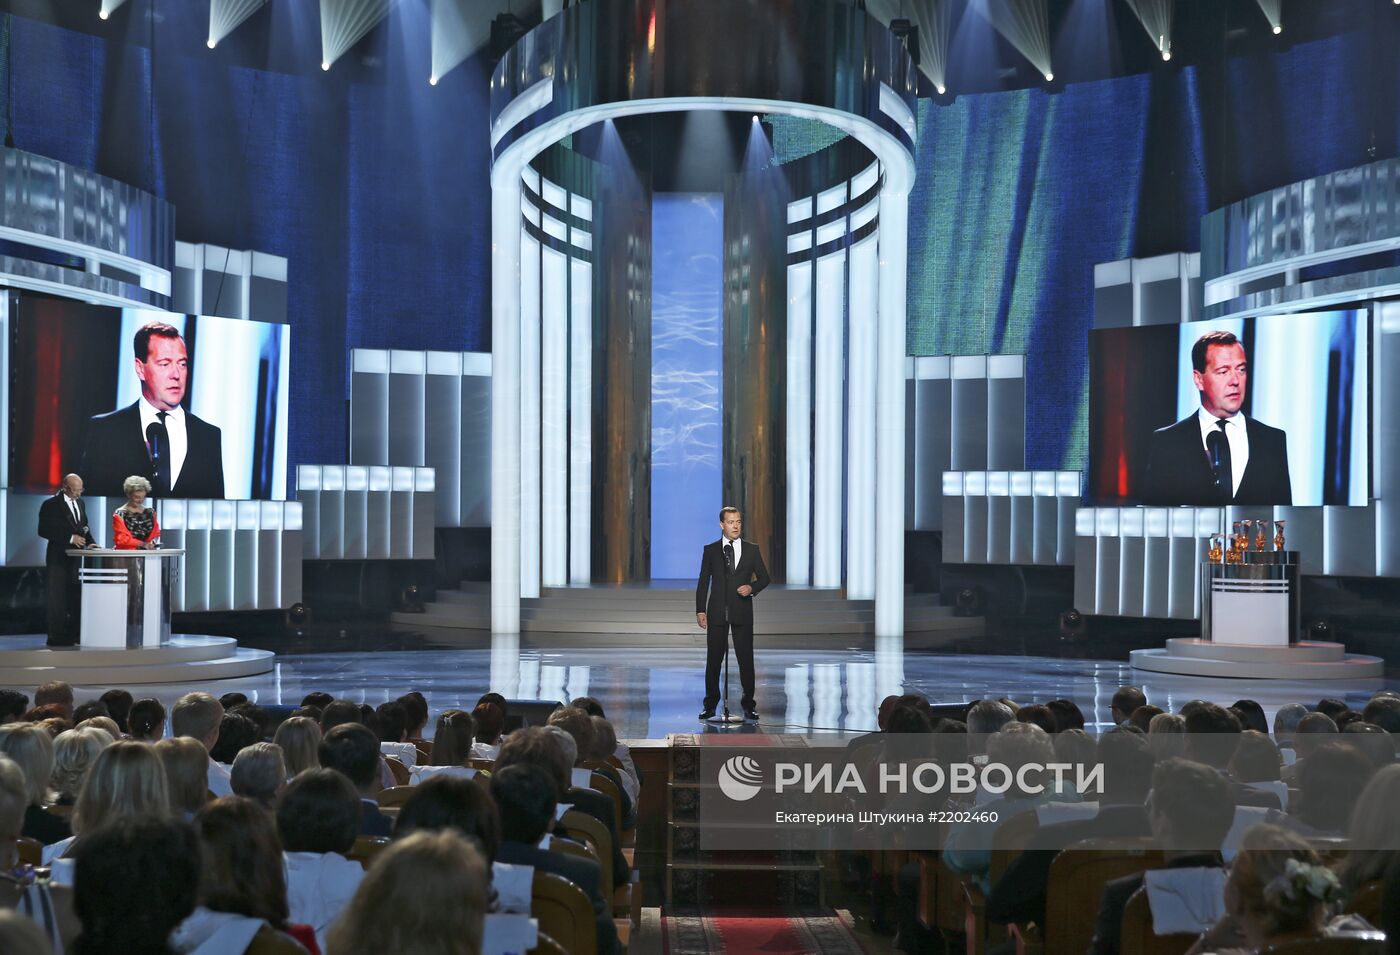 Д.Медведев на церемонии вручения премии "Призвание - 2013"